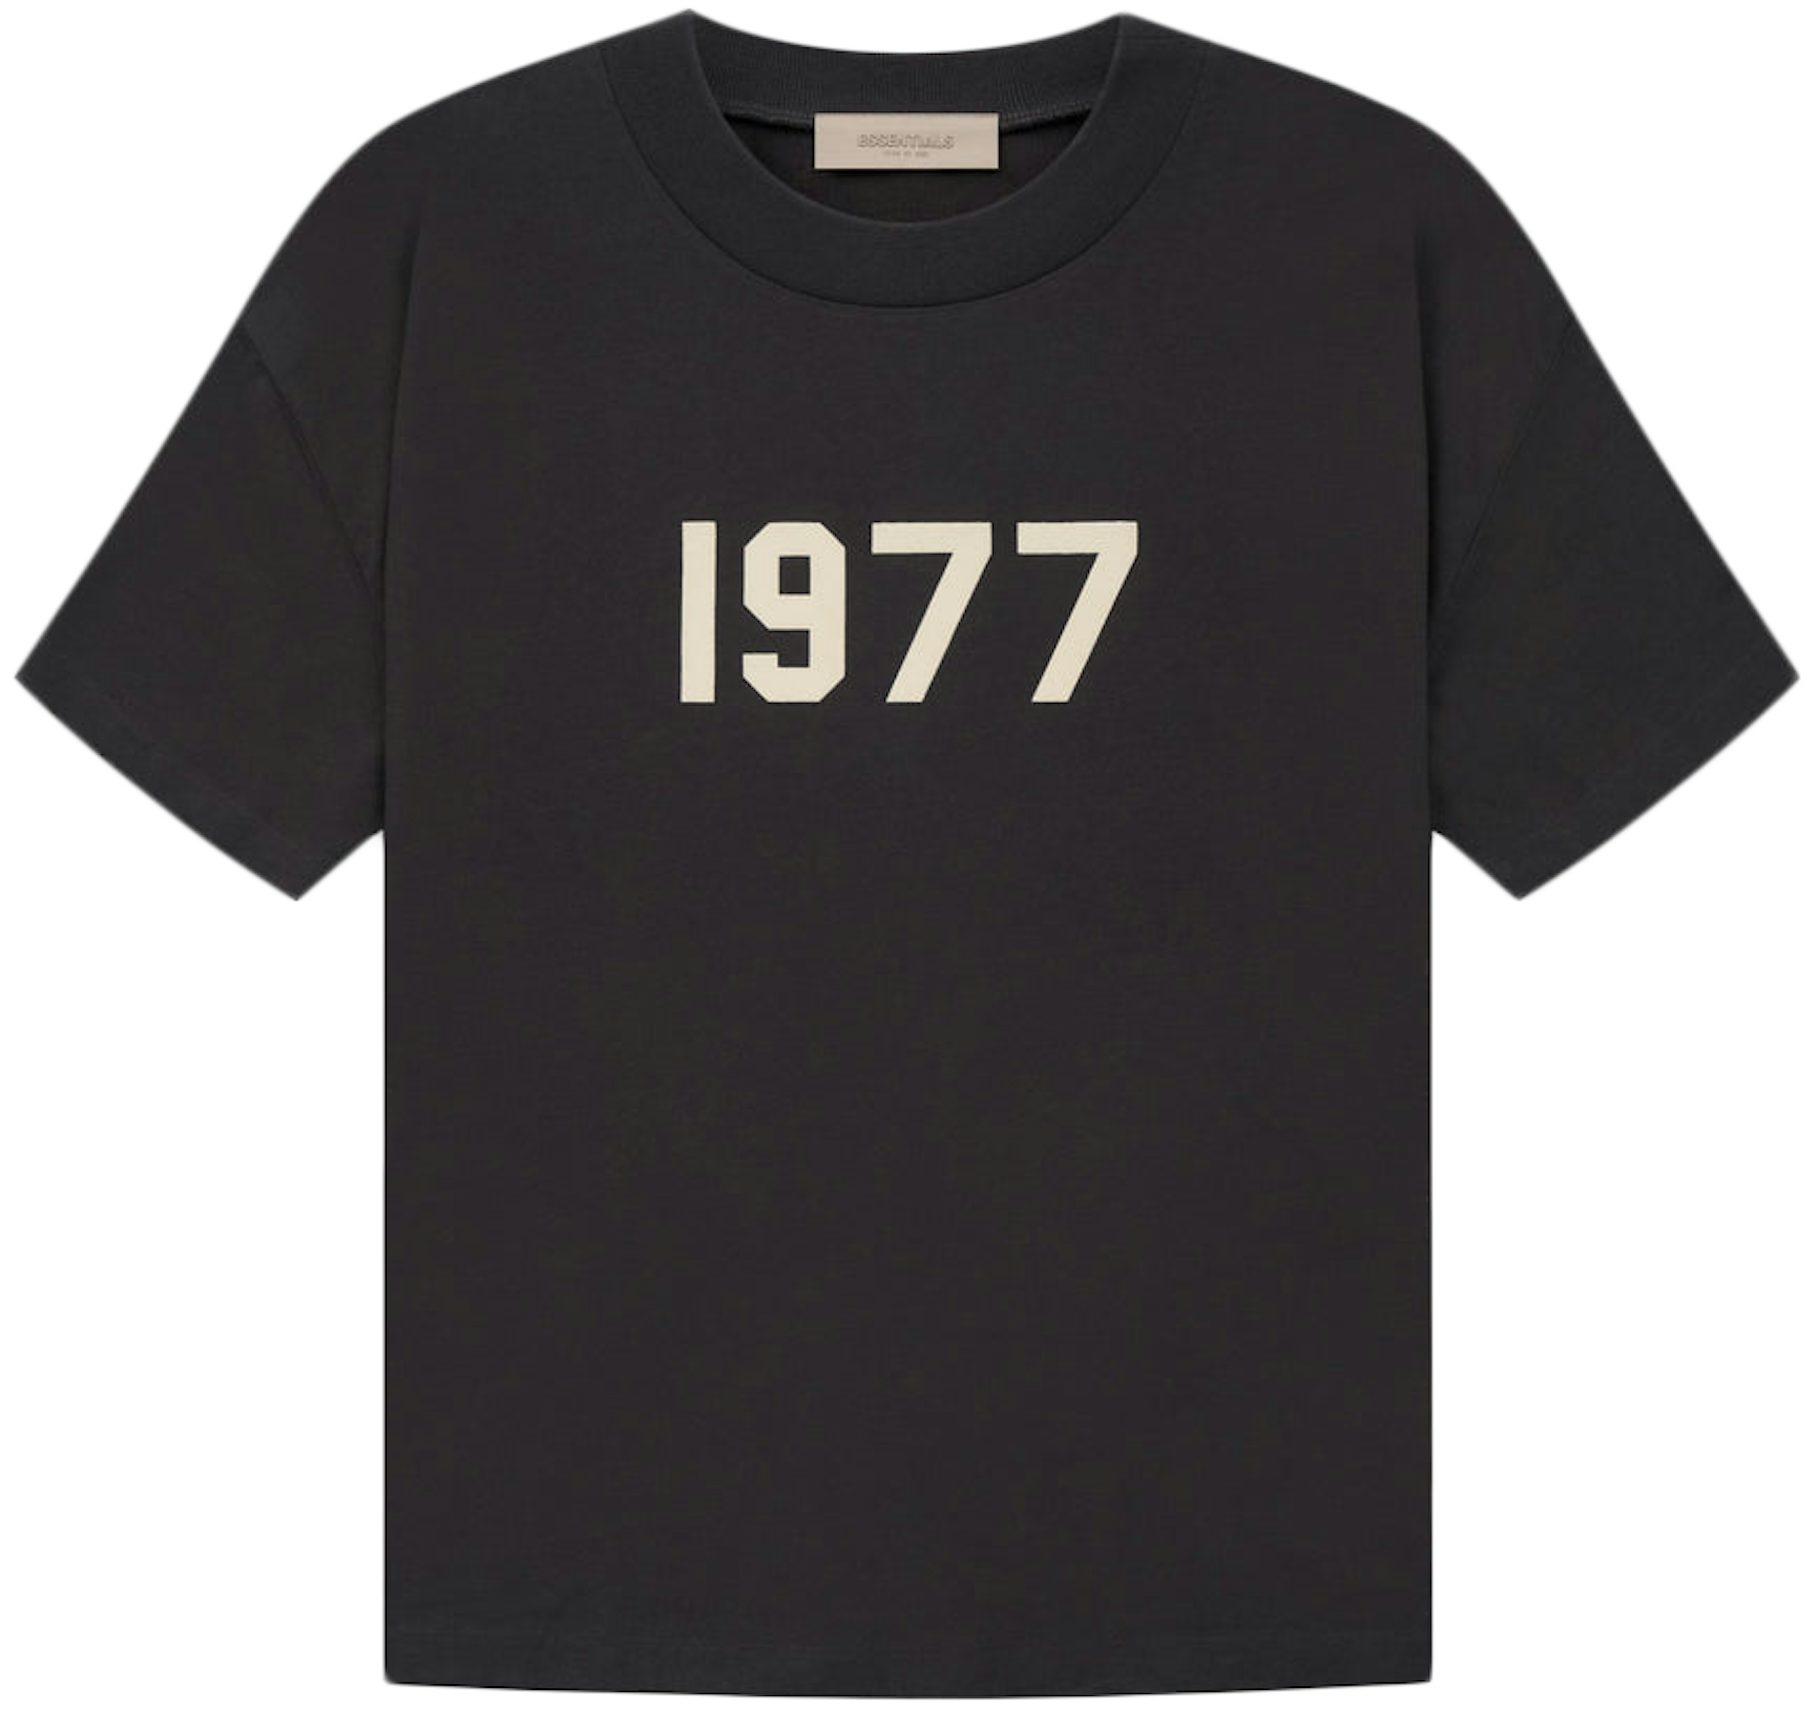 https://images.stockx.com/images/Fear-of-God-Essentials-1977-T-shirt-Iron.jpg?fit=fill&bg=FFFFFF&w=1200&h=857&fm=jpg&auto=compress&dpr=2&trim=color&updated_at=1646952567&q=60